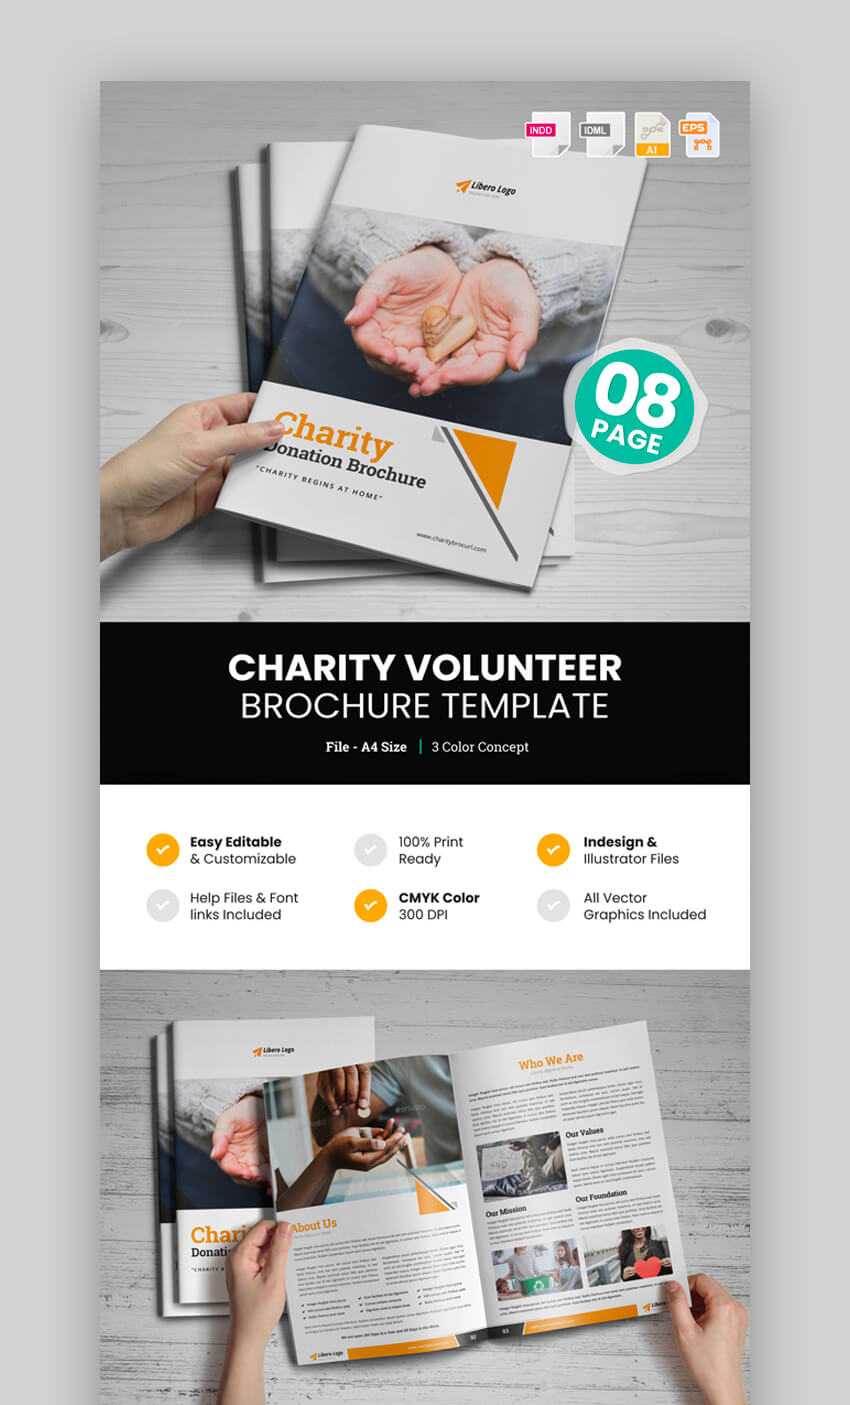 20 Best Professional Business Brochure Design Templates For 2019 Intended For Volunteer Brochure Template